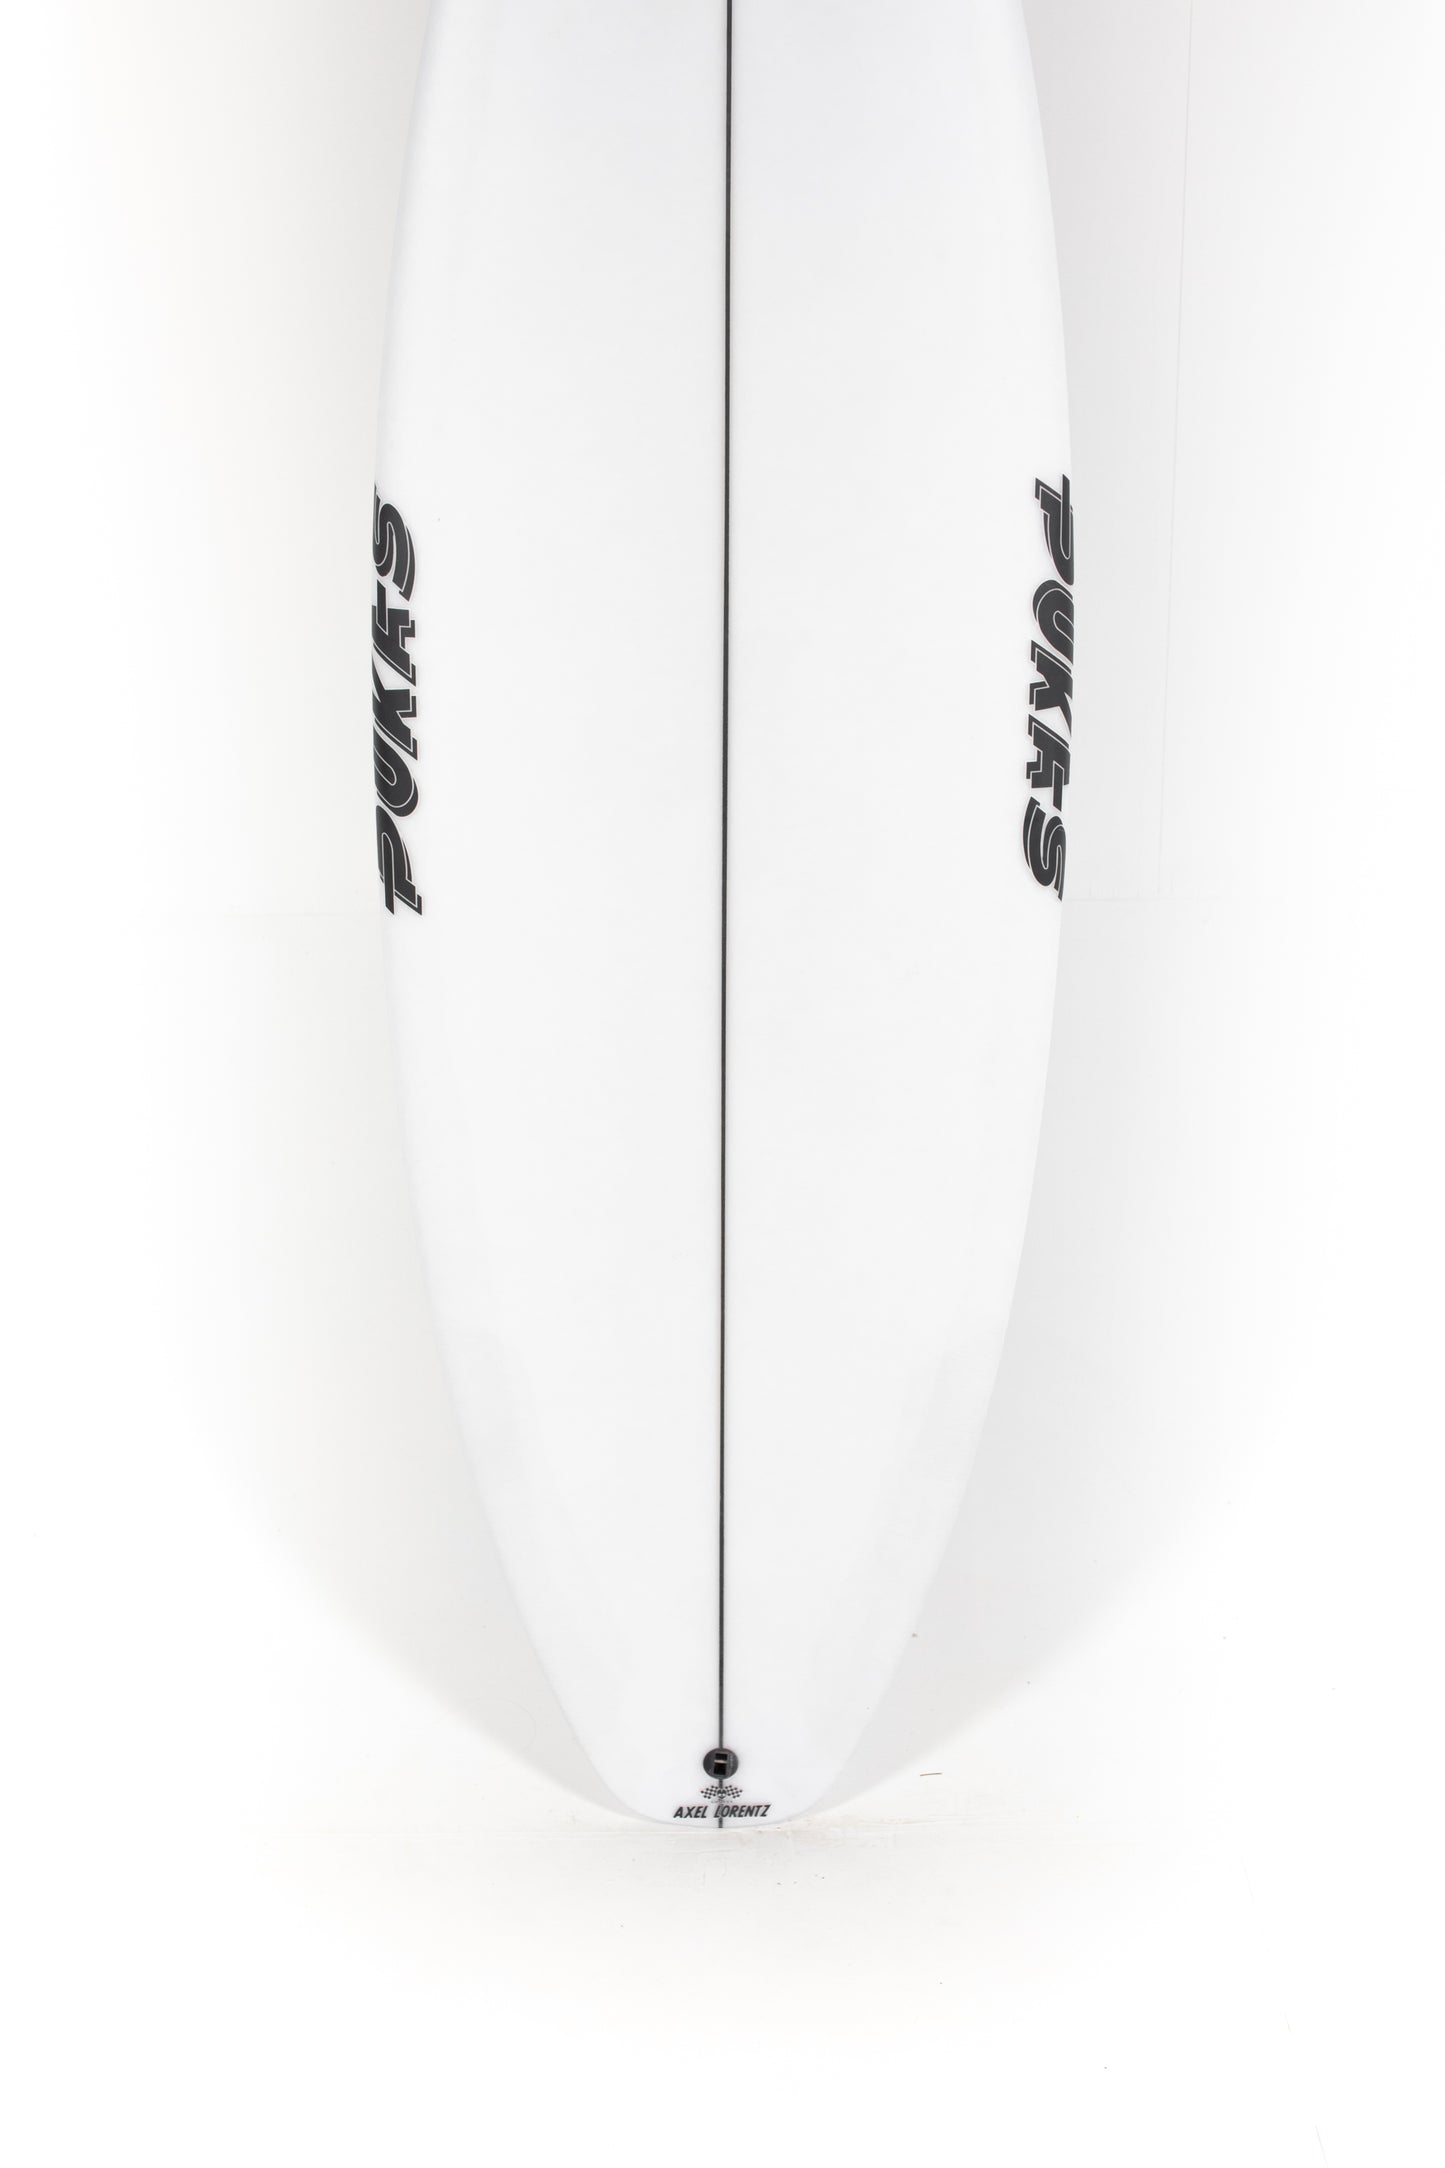 
                  
                    Pukas Surf Shop - Pukas Surfboard - DARKER by Axel Lorentz - 5'8" x 19 x 2,25 x 25,9L. - AX08146
                  
                